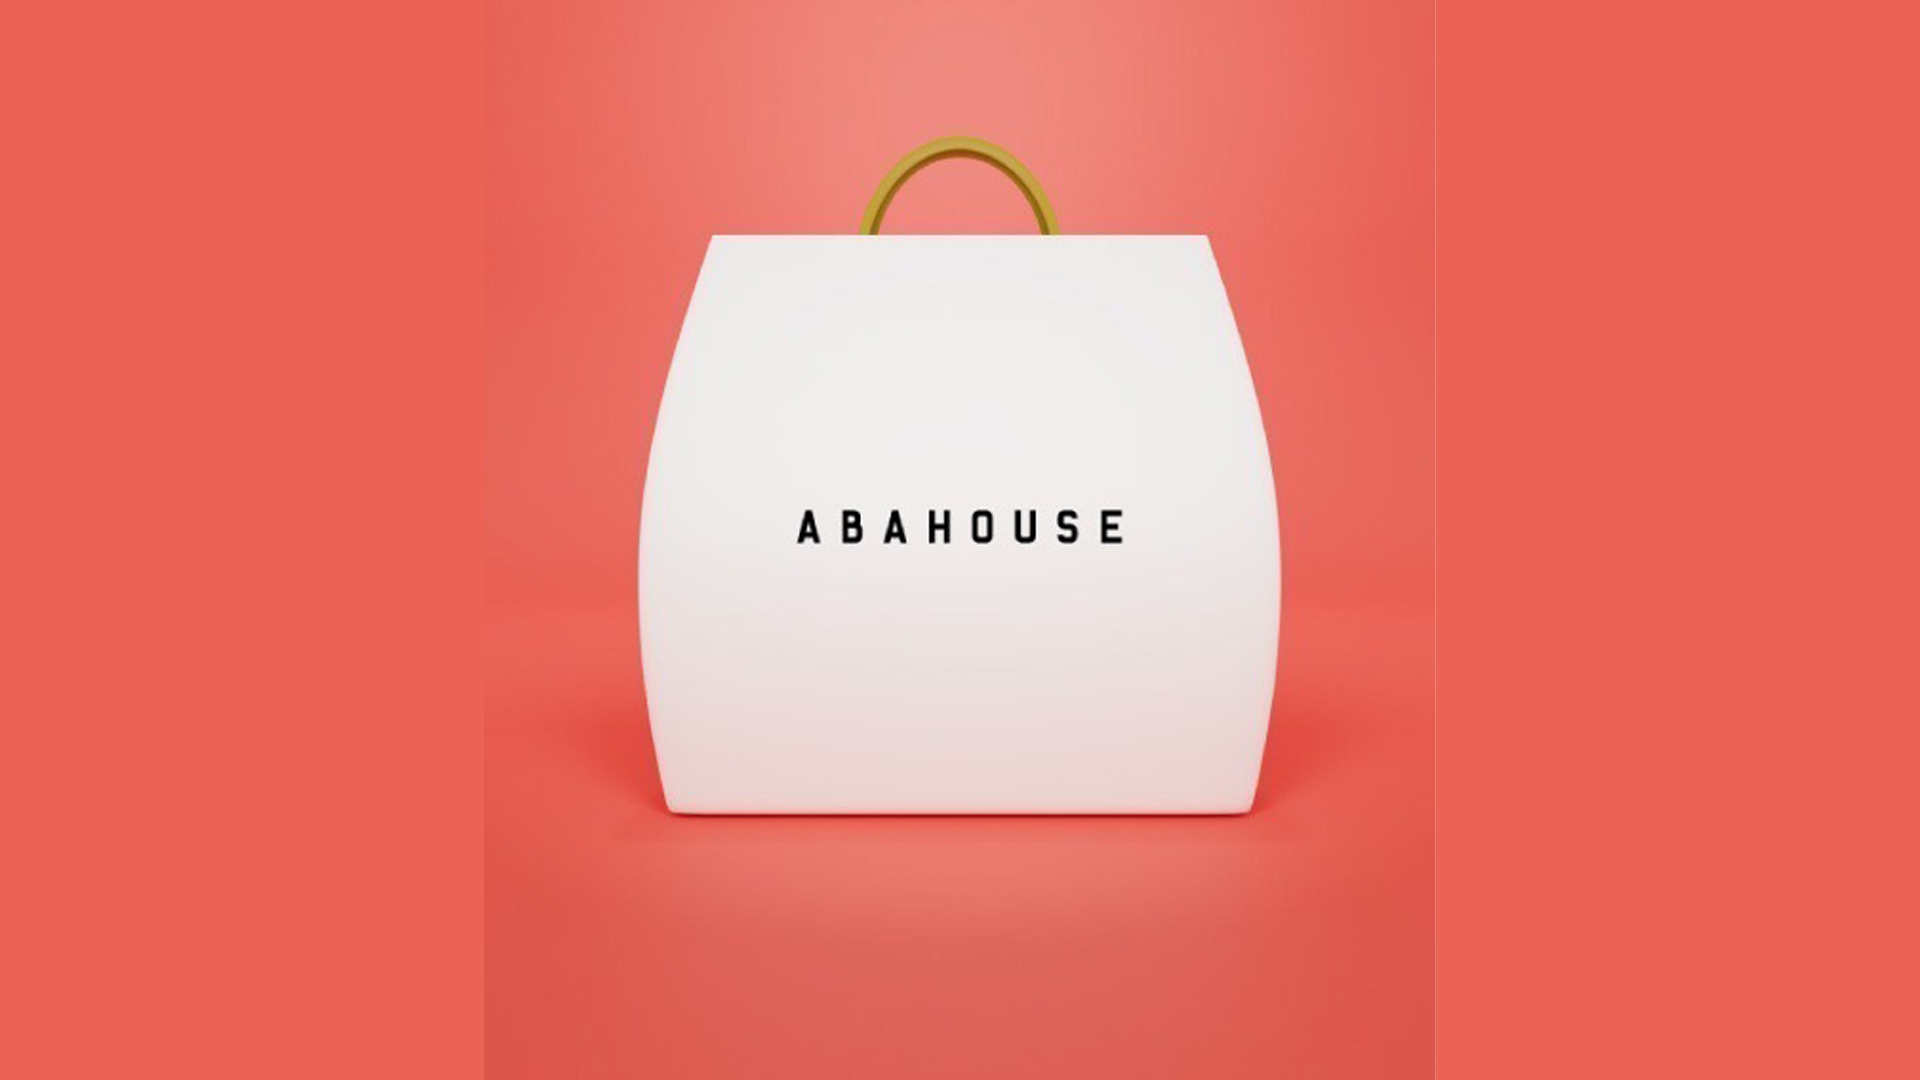 abahouse